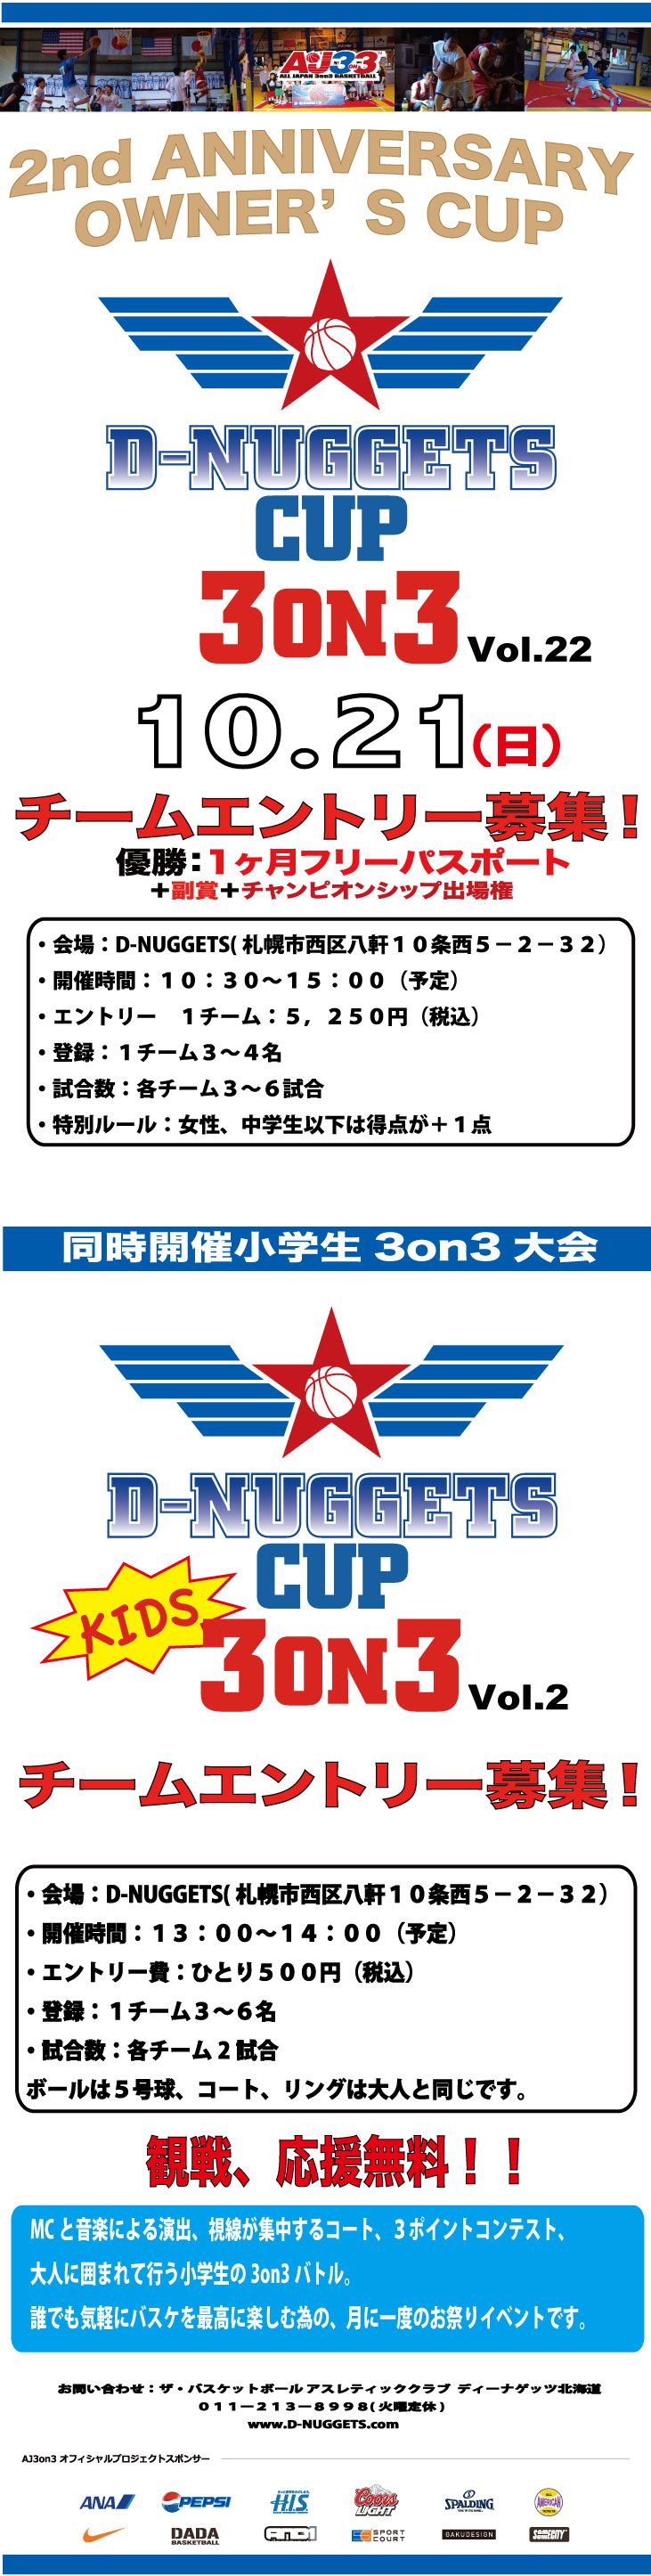 D-NUGGETS-CUP-HOKKAIDO-Vl.22.jpg